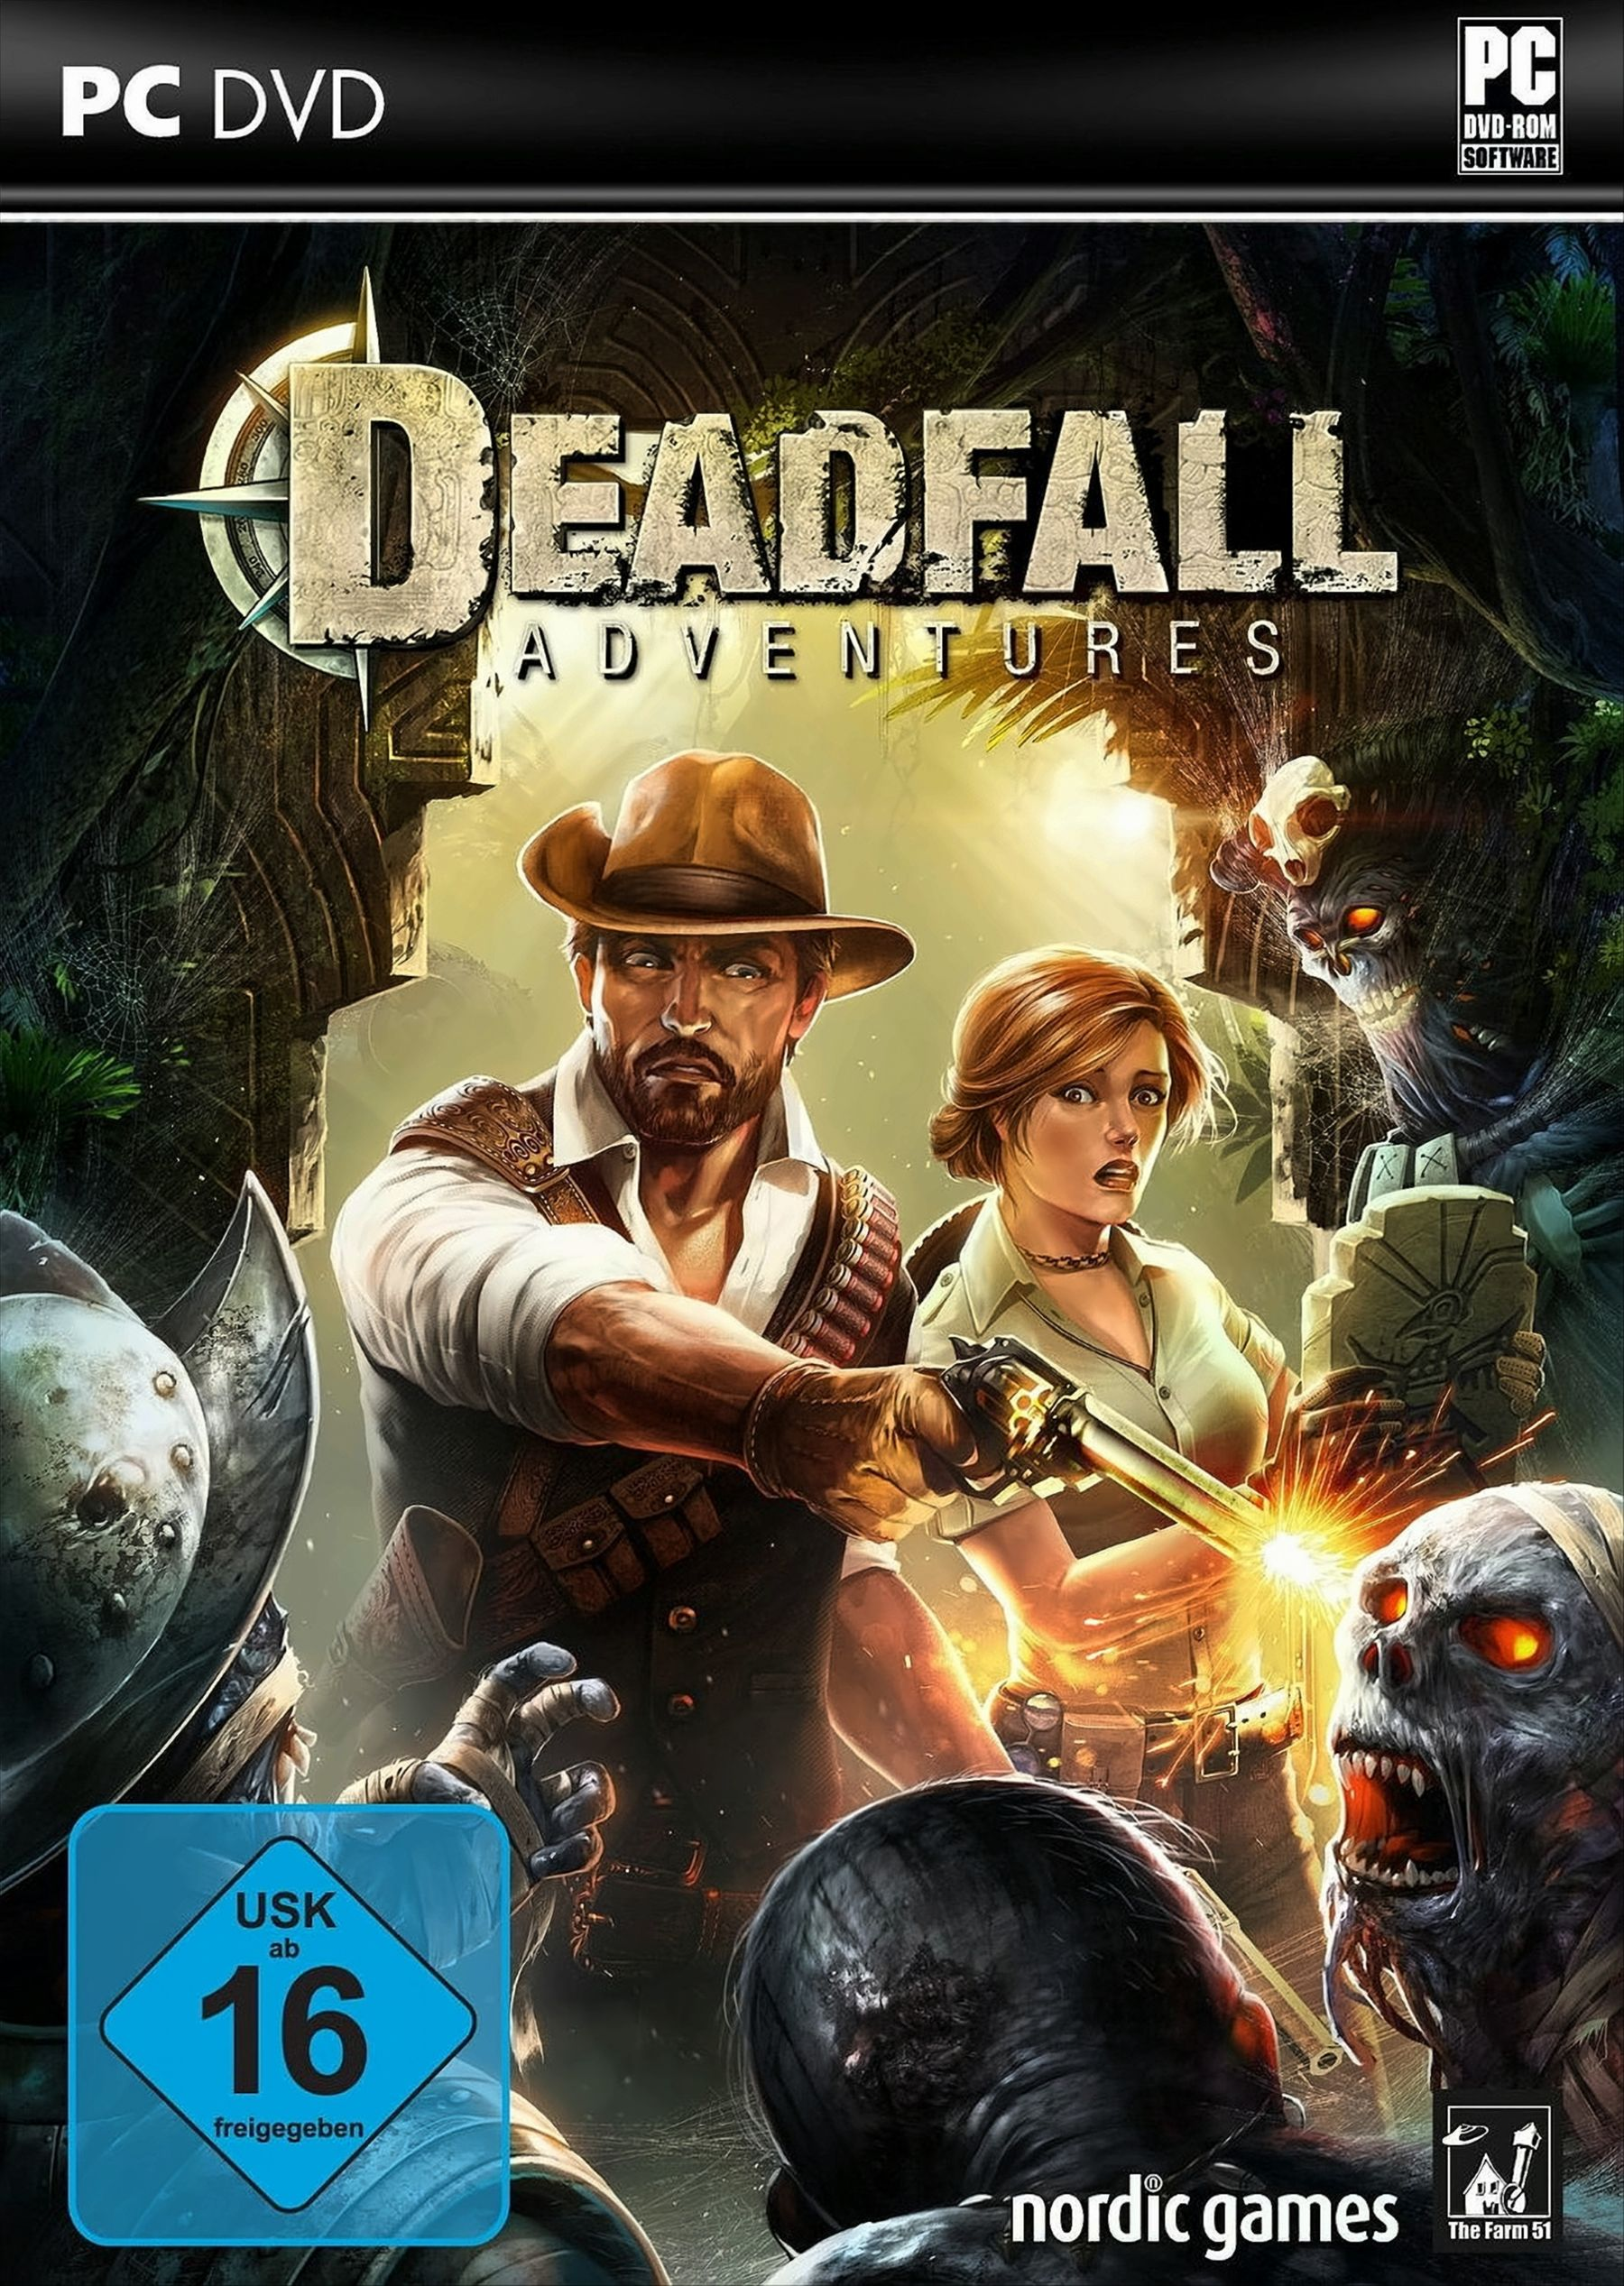 - [PC] Adventures Deadfall